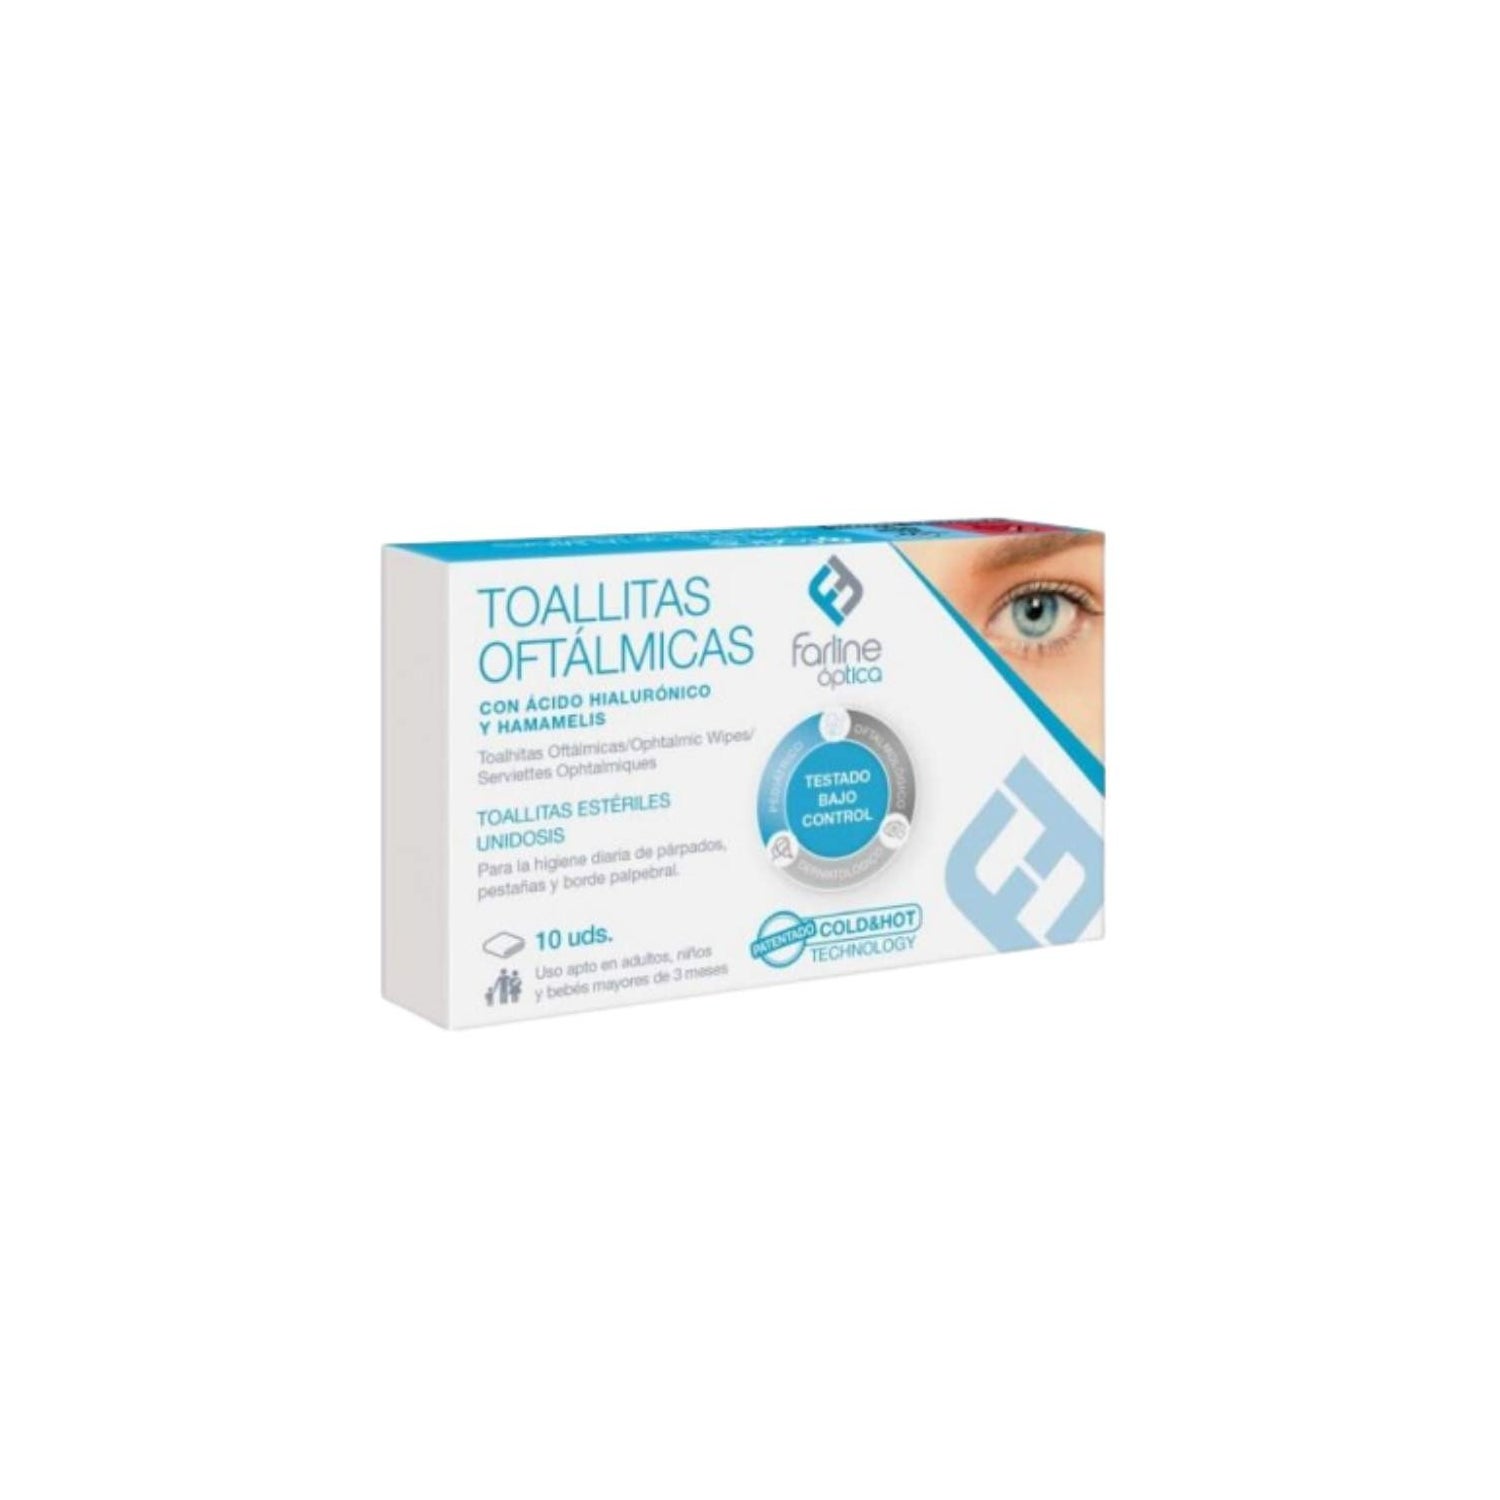 Toallitas para higiene ocular de farmacia Nesira - ACOFARMA